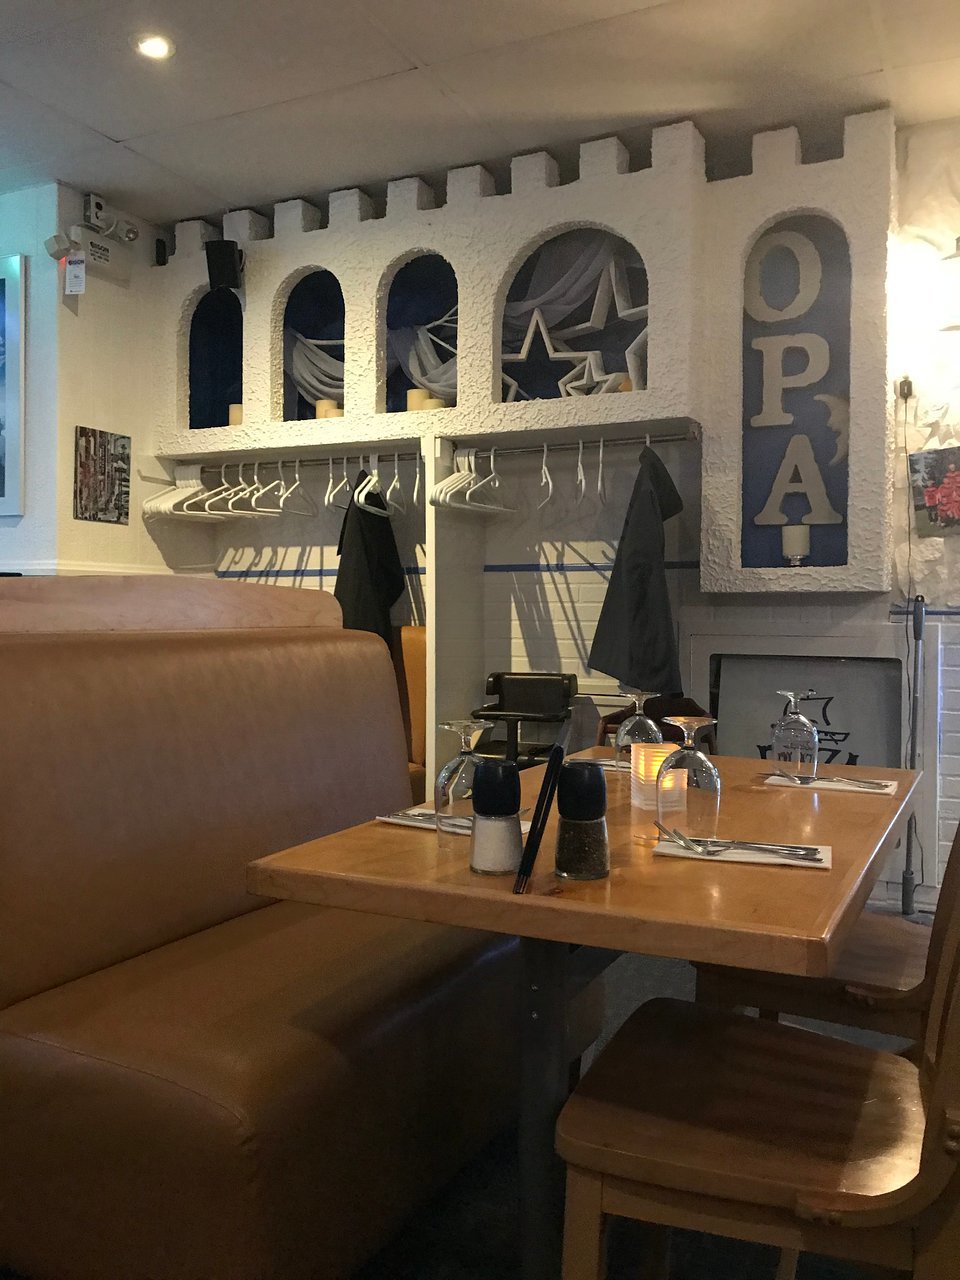 Plaza Restaurant & Tavern